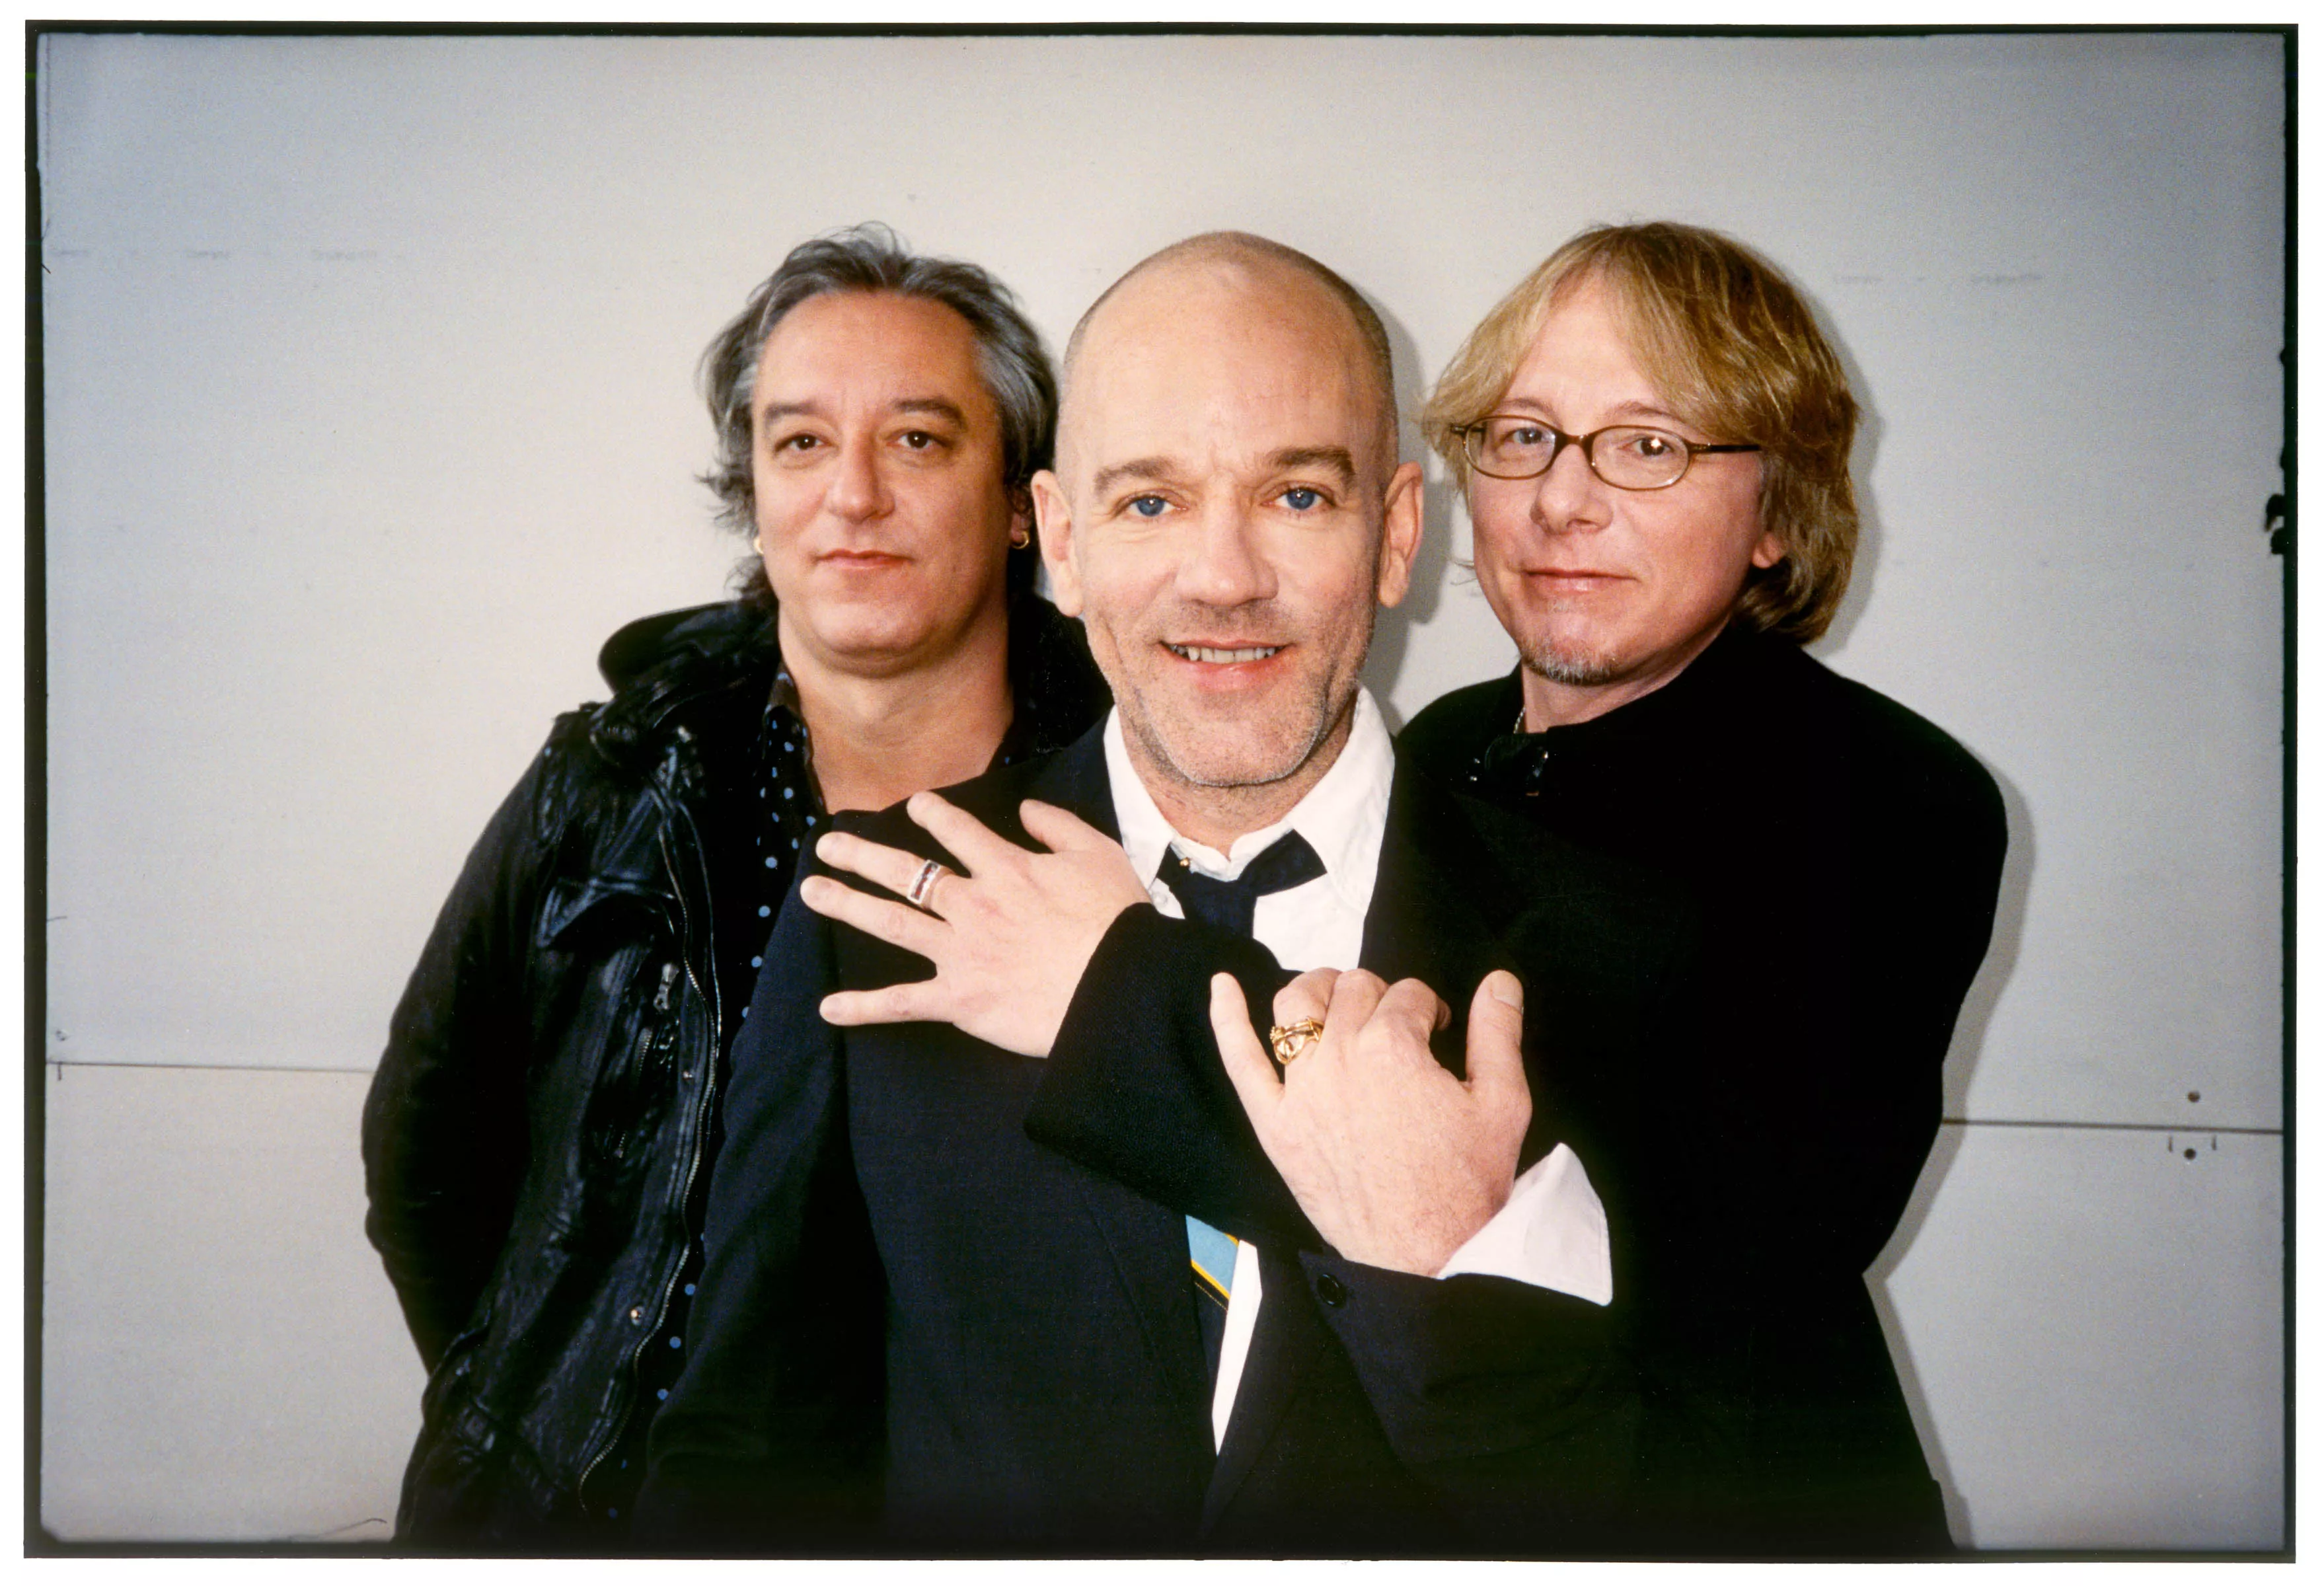 R.E.M.: Live from Austin TX